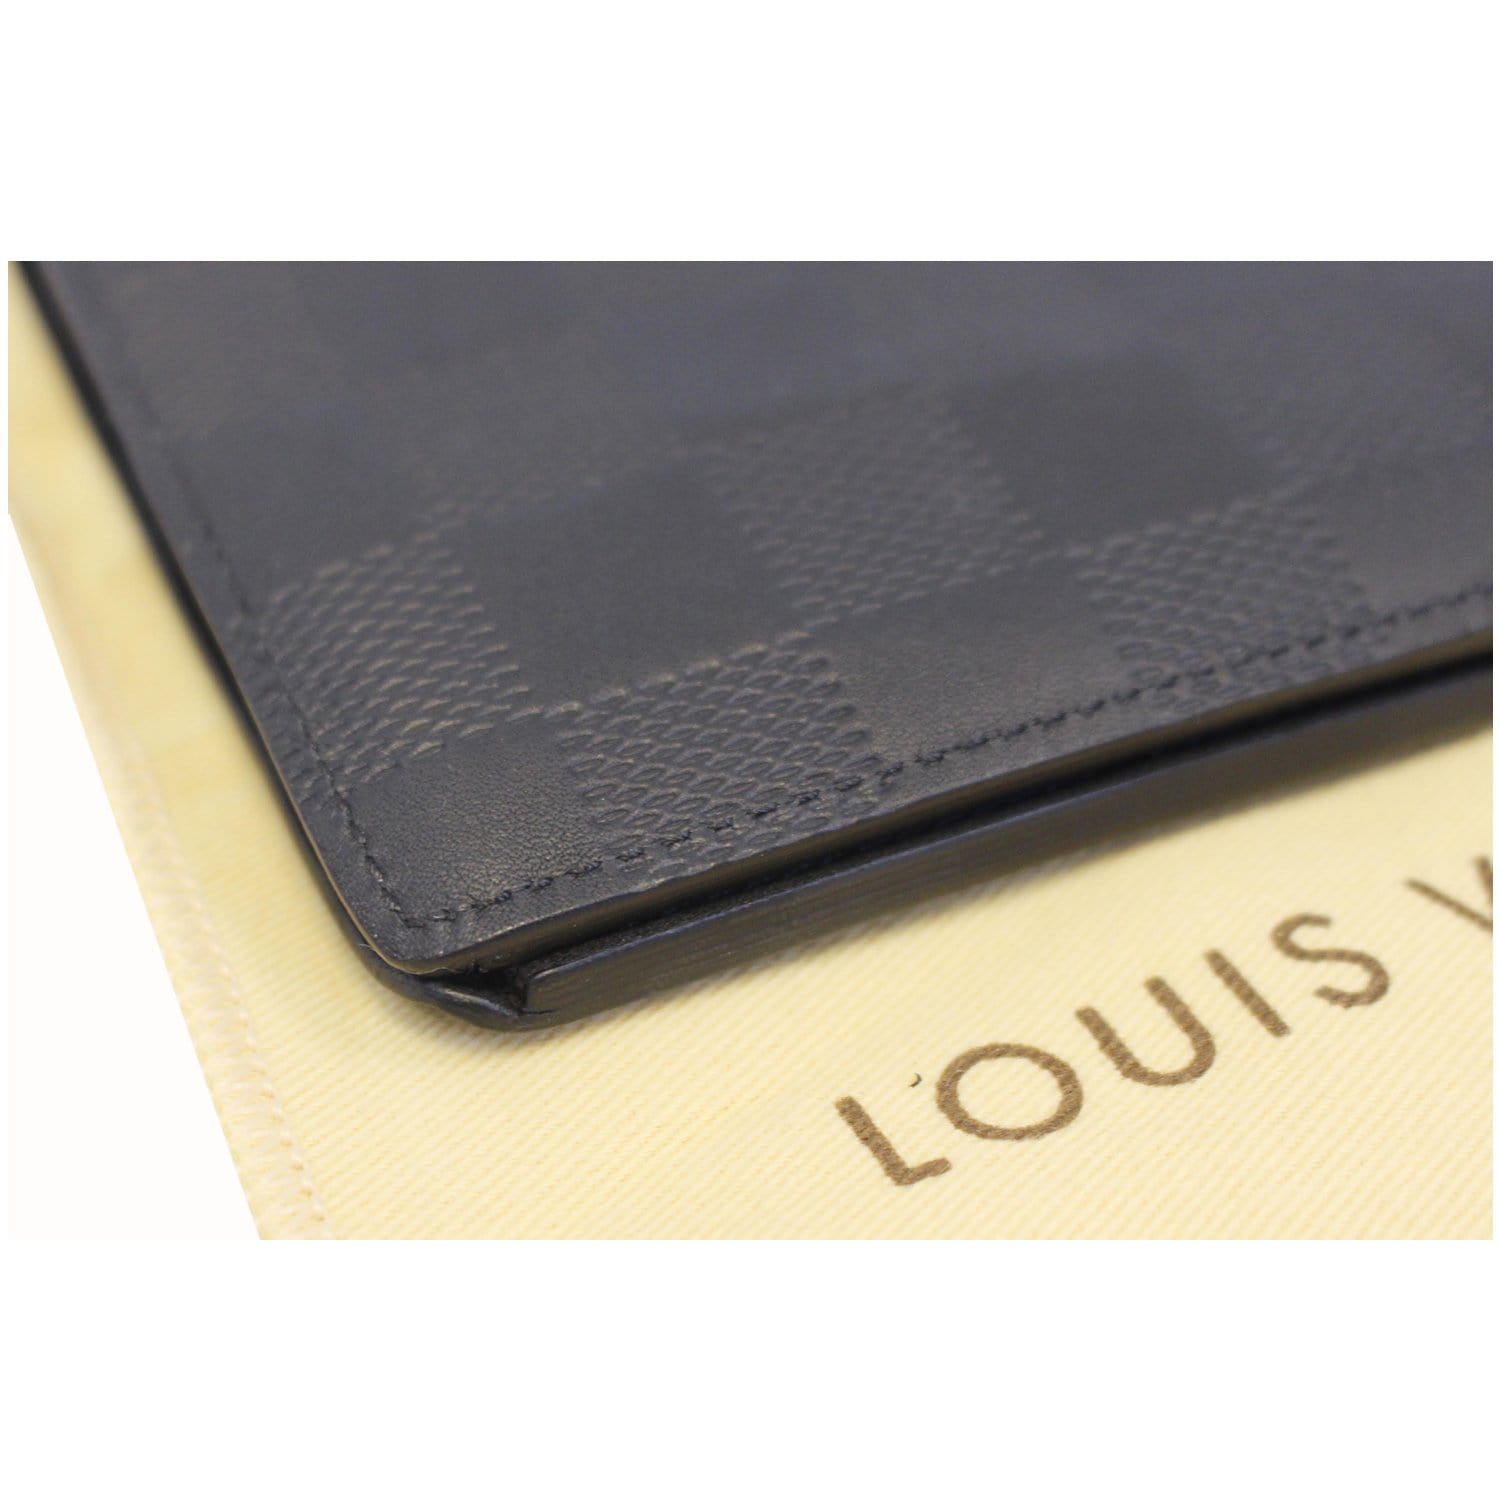 Louis Vuitton Men's Black Leather Pocket Organizer Damier Infini